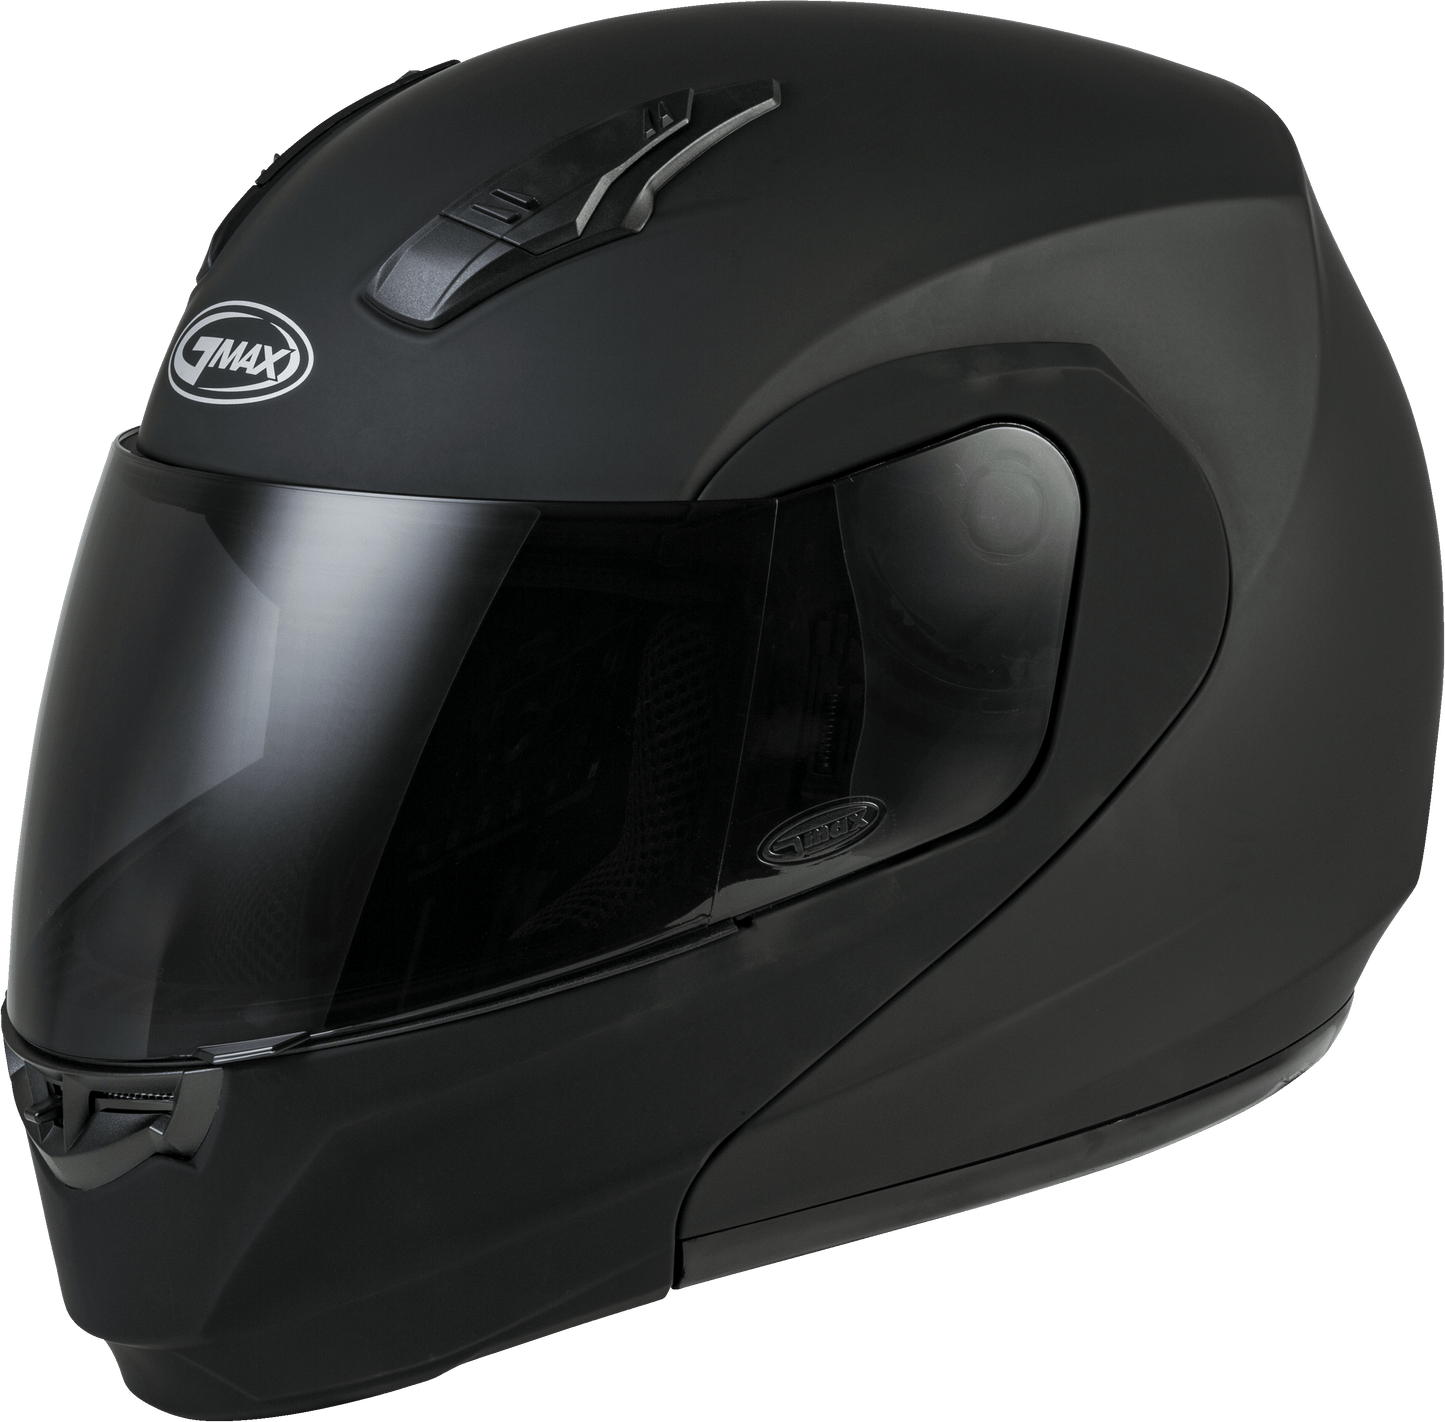 Gmax 72-5021 MD-04 Modular Helmet Matte Black